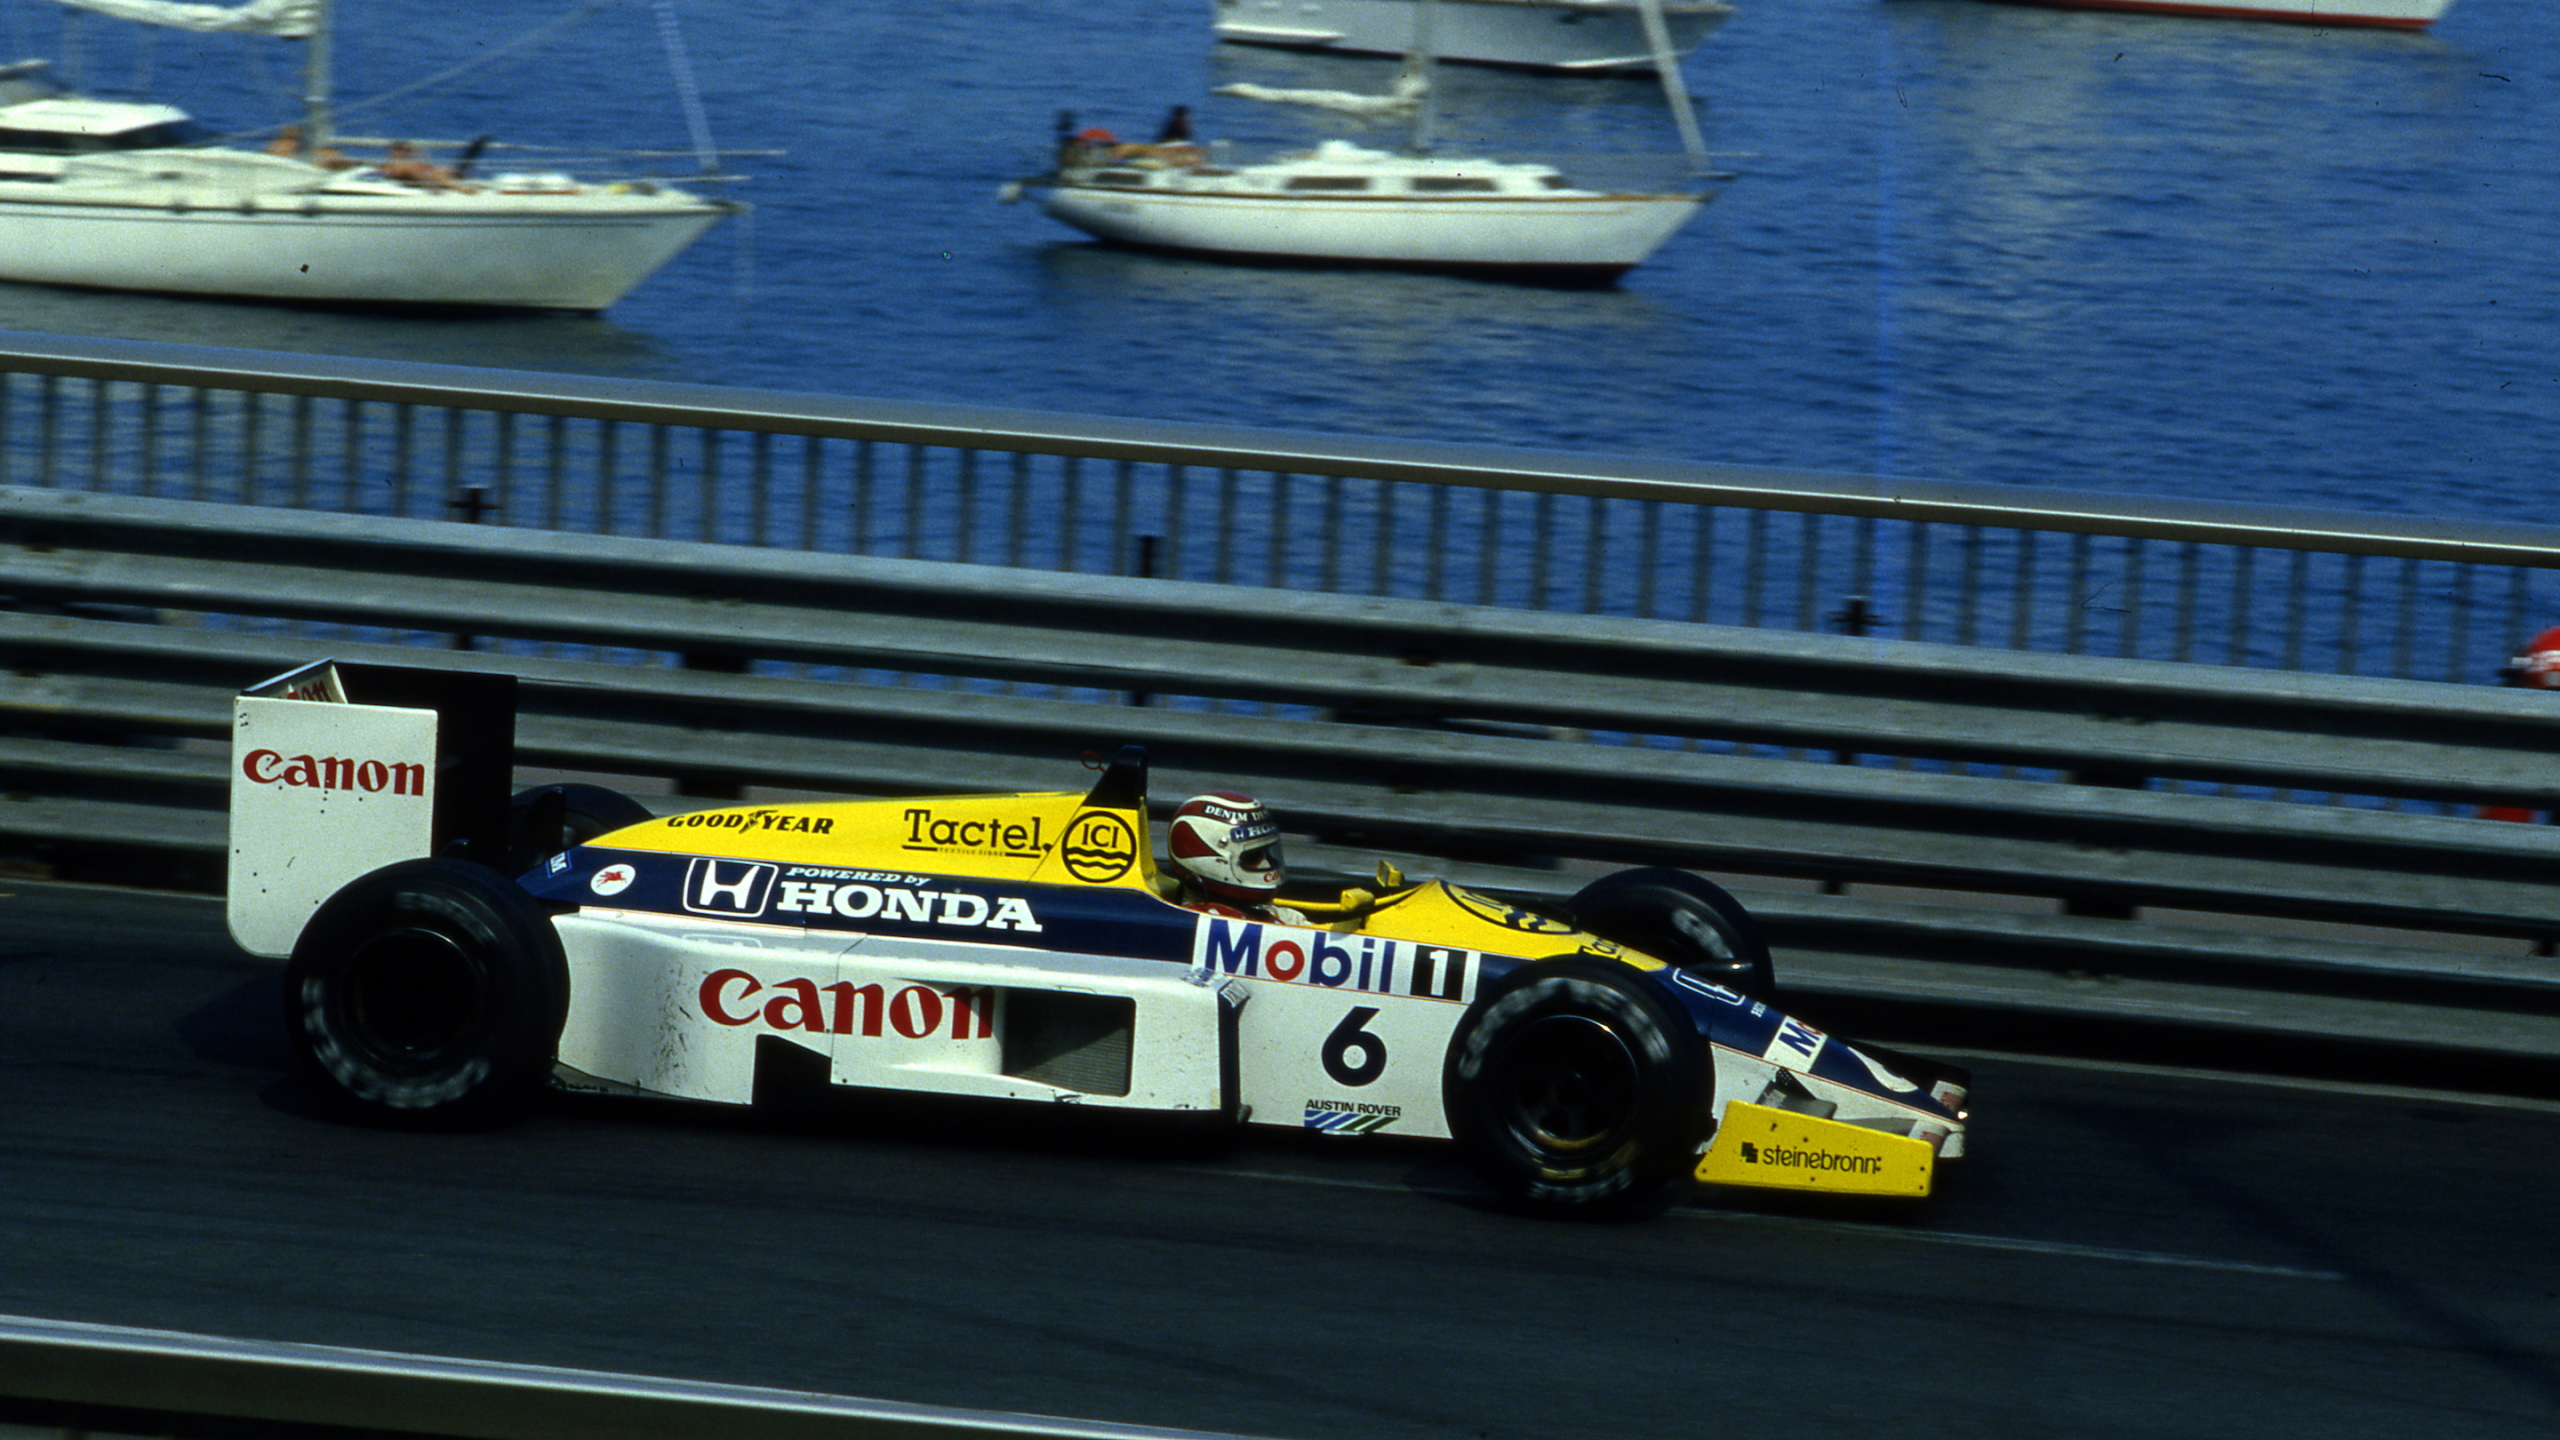 Williams F1 Race Cars Formula 1 Honda Canon Monaco Grand Prix Motorsport Nelson Piquet Car Vehicle 2560x1440